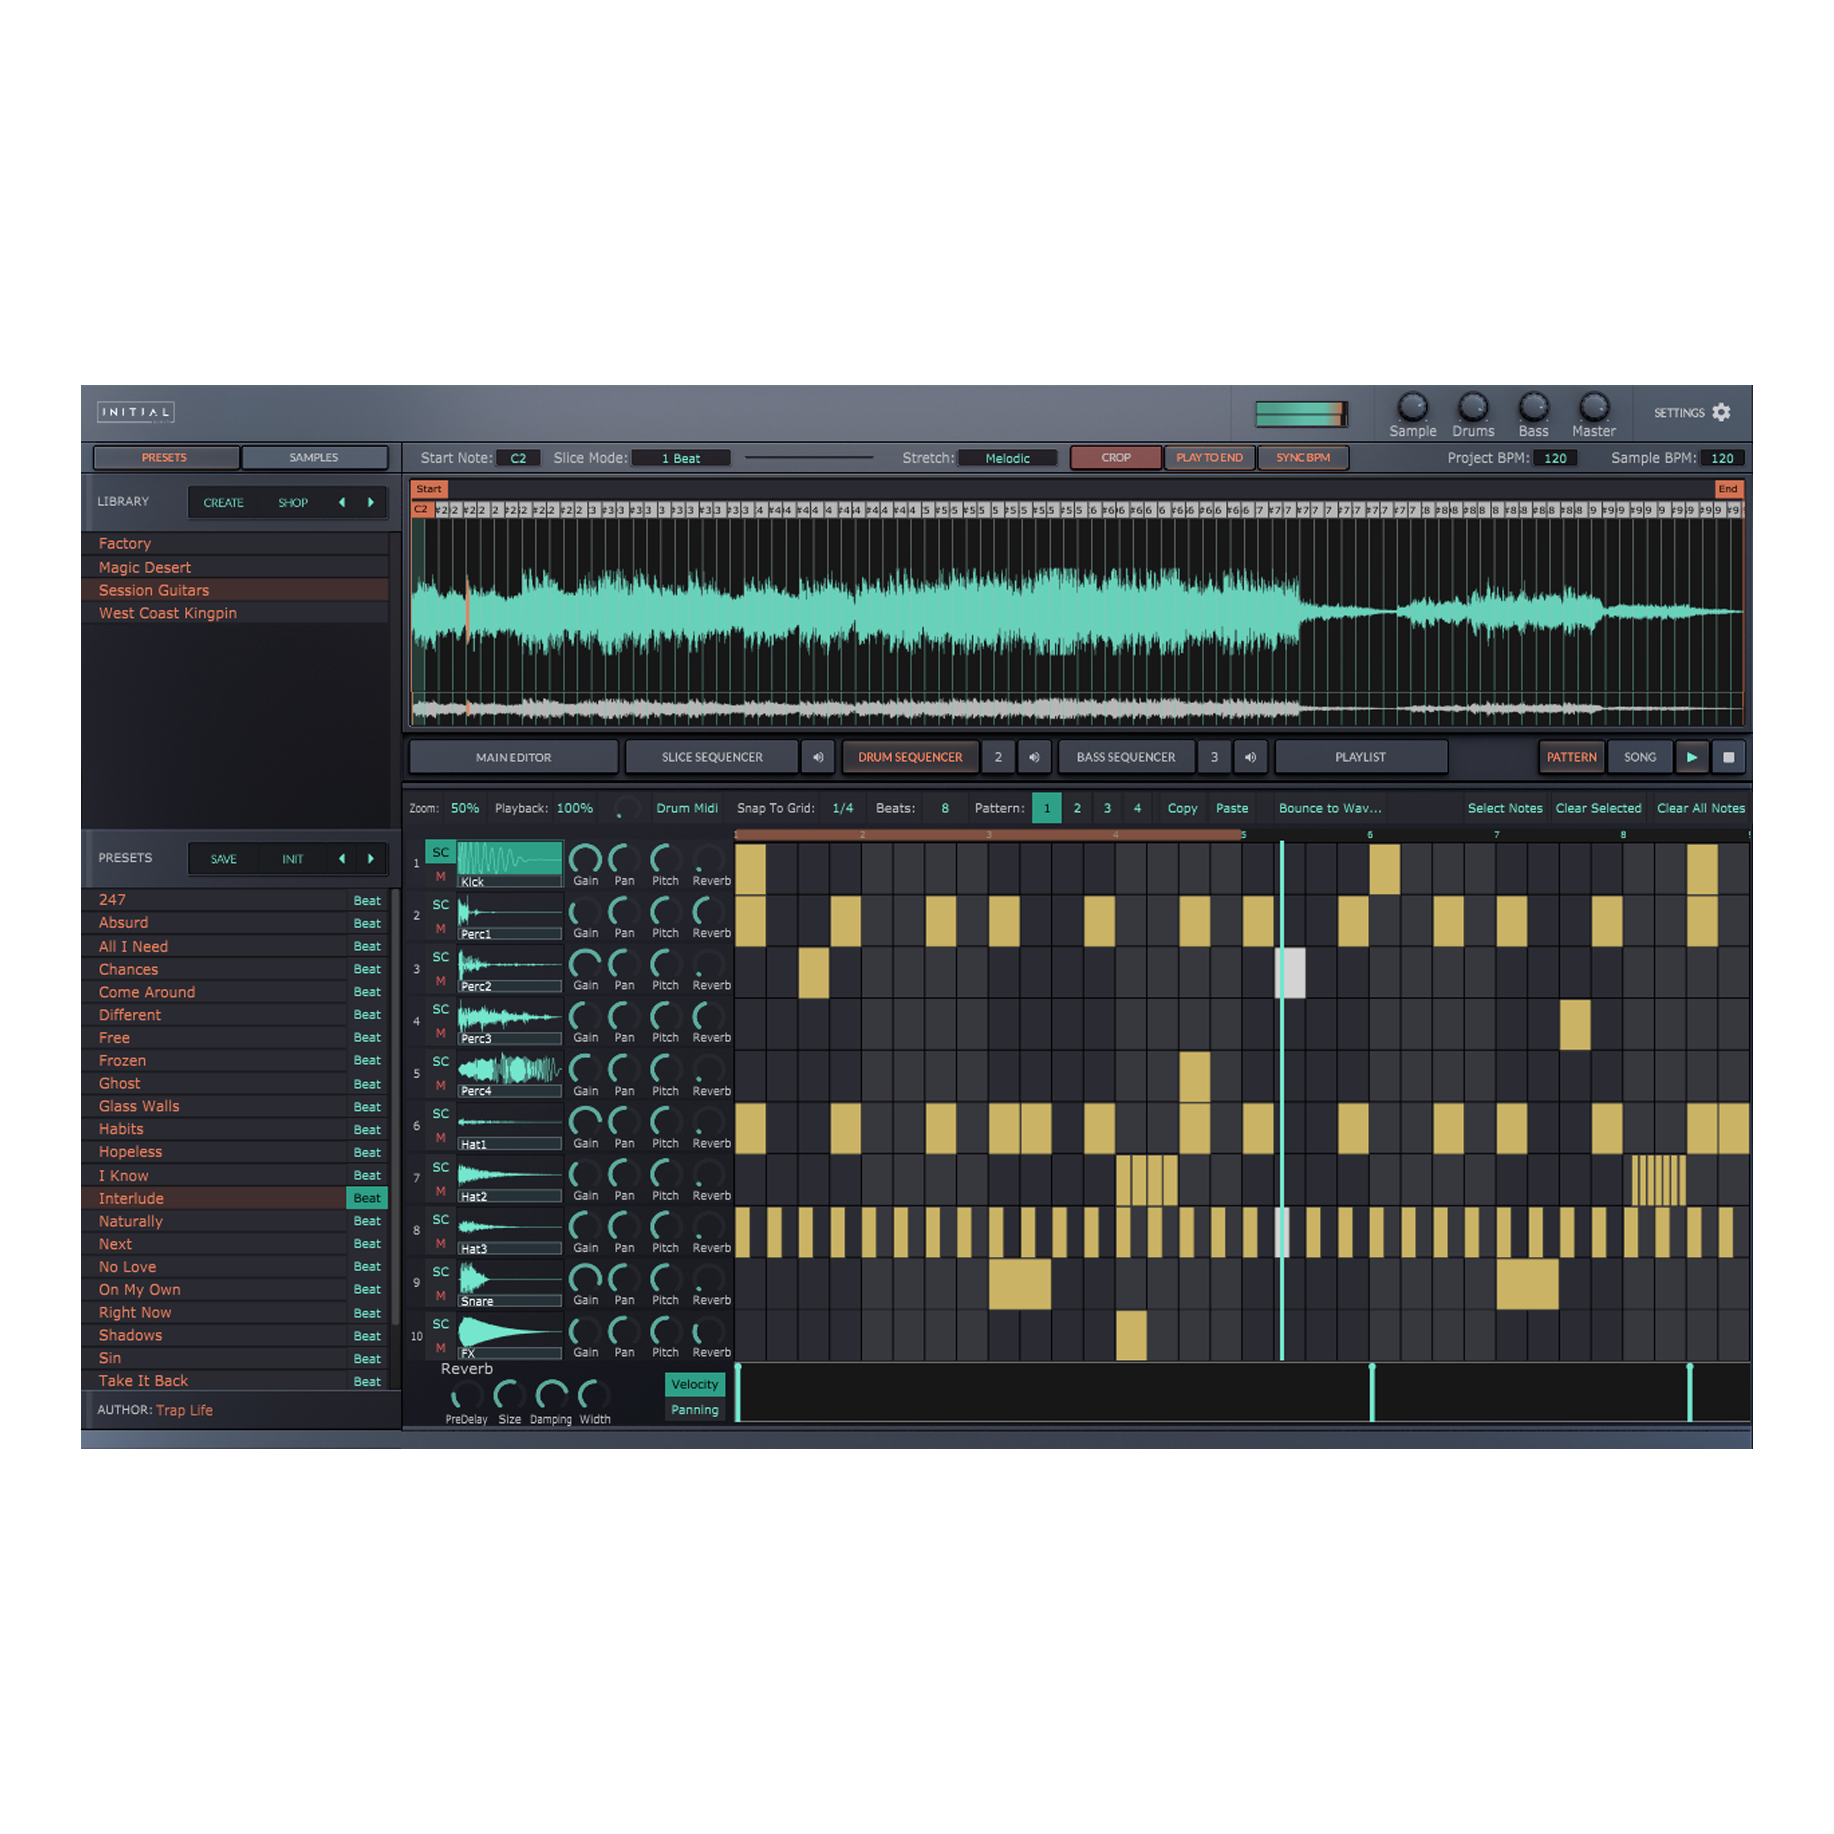 FL Studio release free v20.6 update